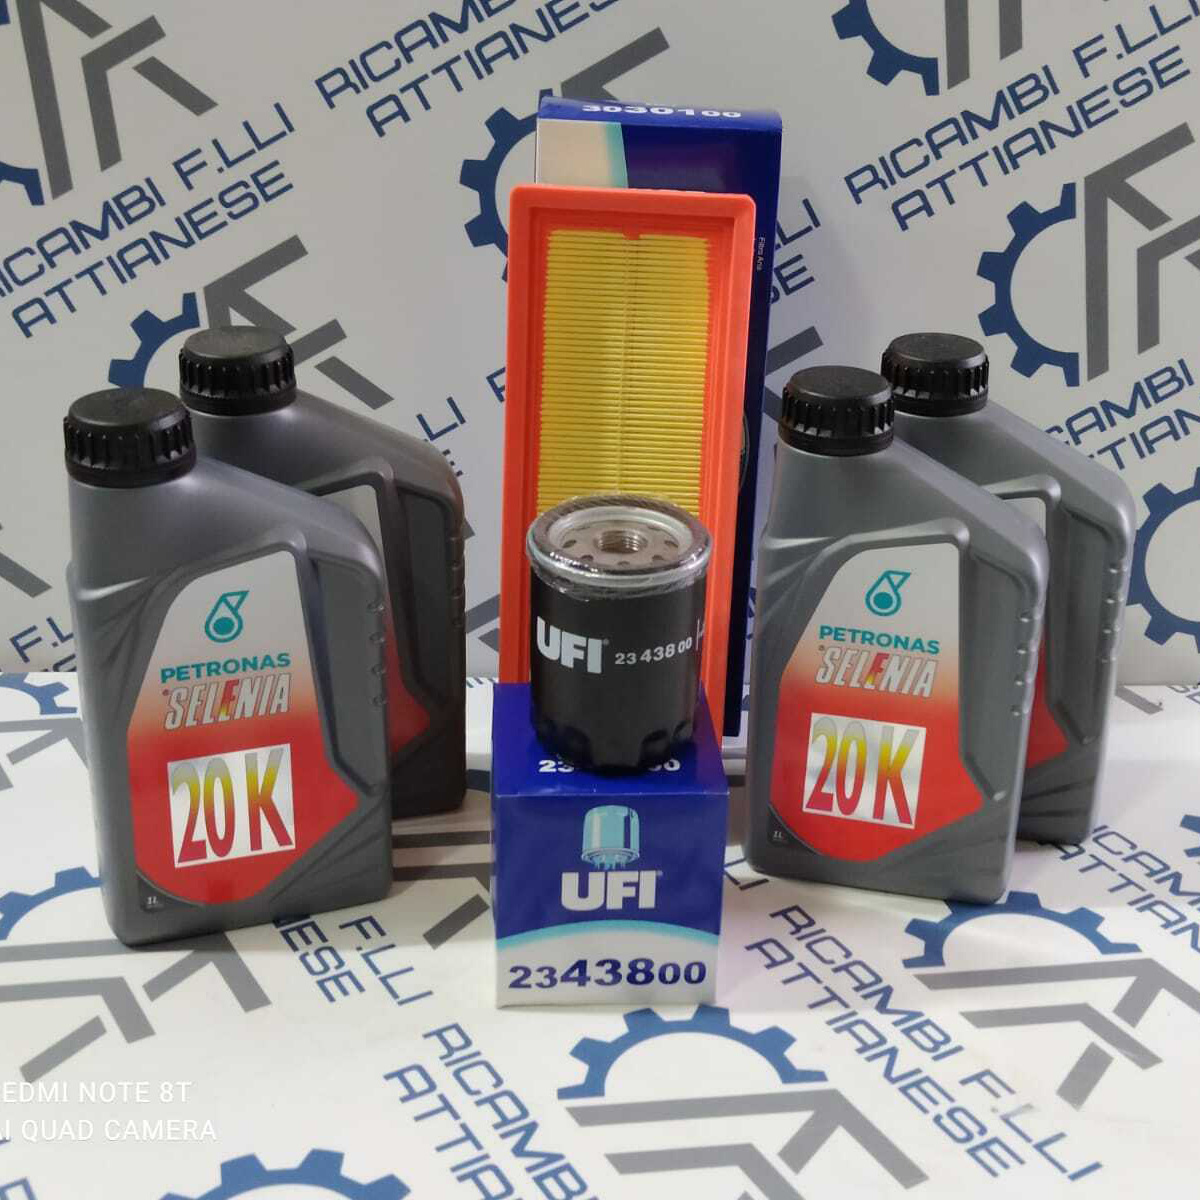 Kit tagliando 2 filtri ufi fiat 500 dal 2007 1.2 benzina e 4 lt olio  selenia 20k - Ricambi F.lli Attianese